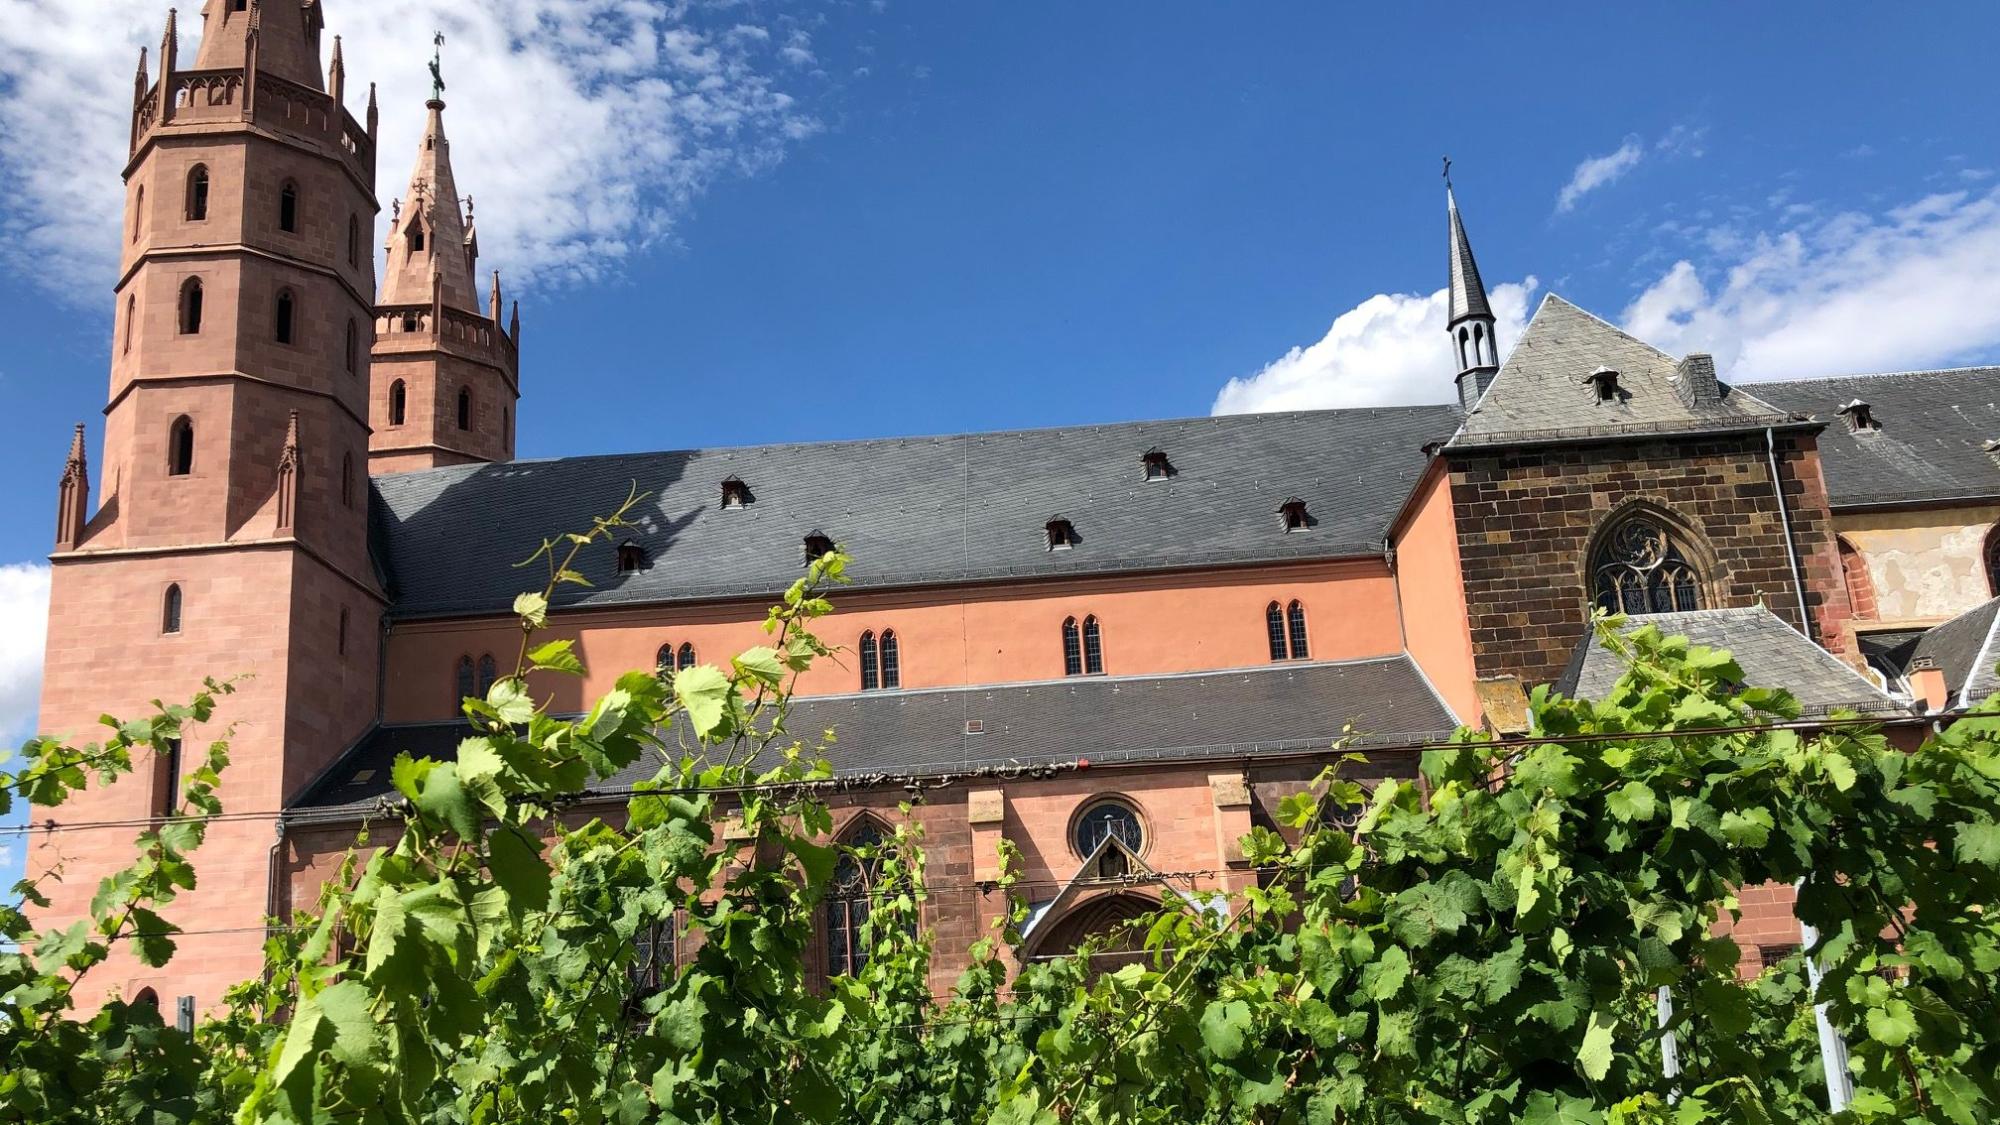 Liebrauenkirche Worms